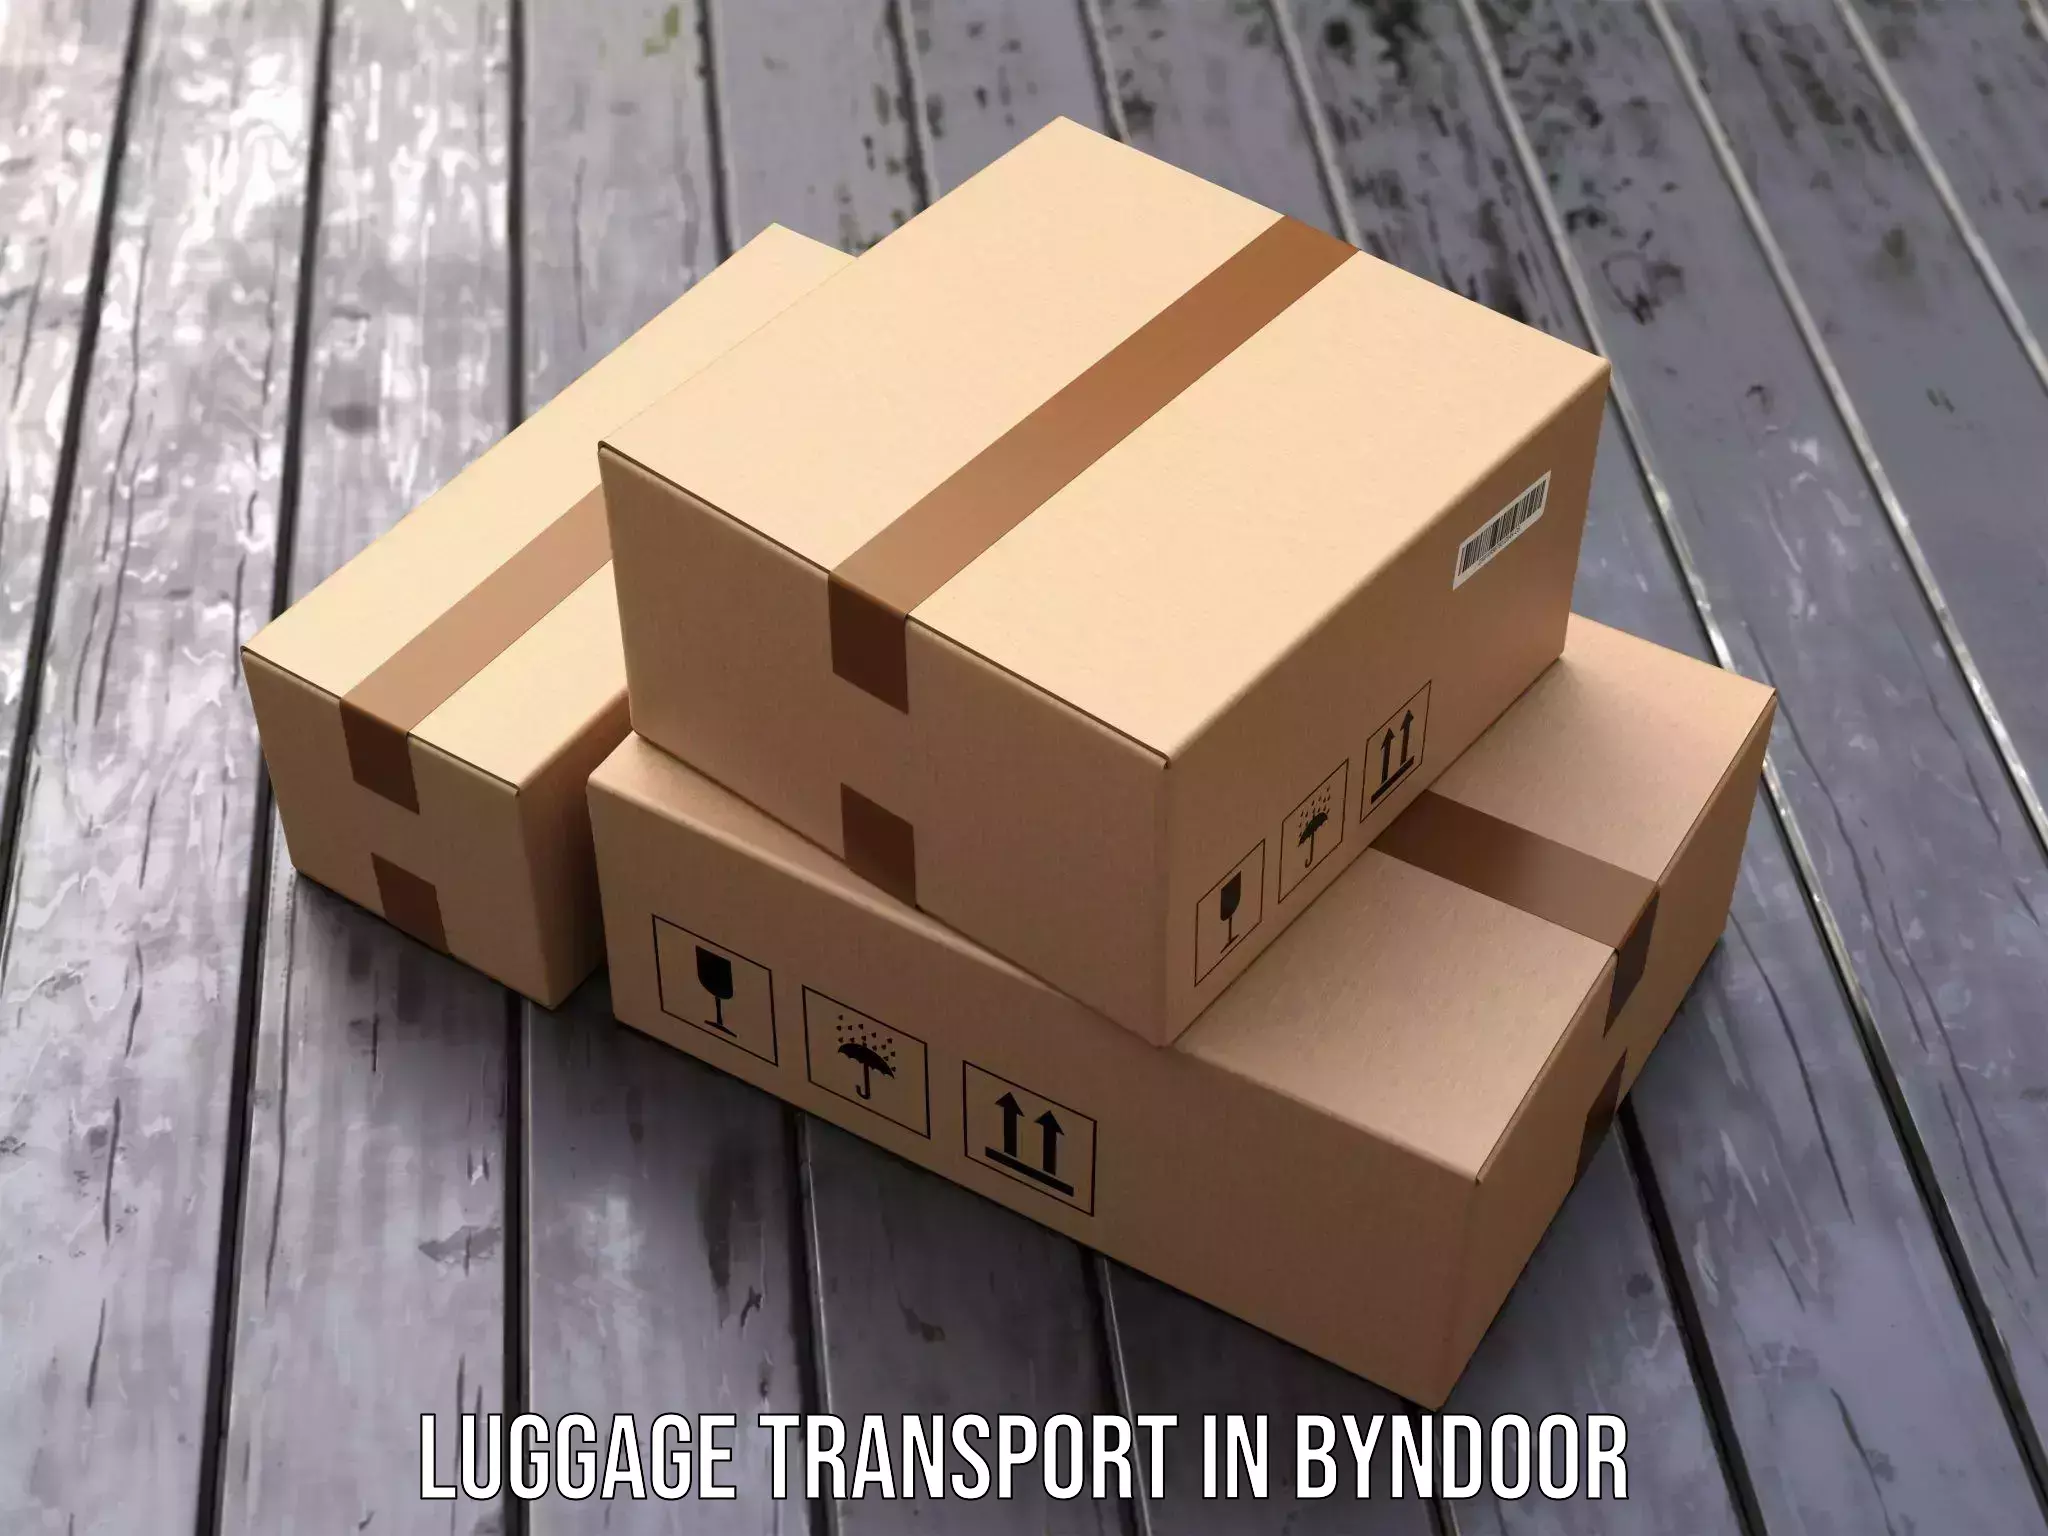 Doorstep luggage collection in Byndoor